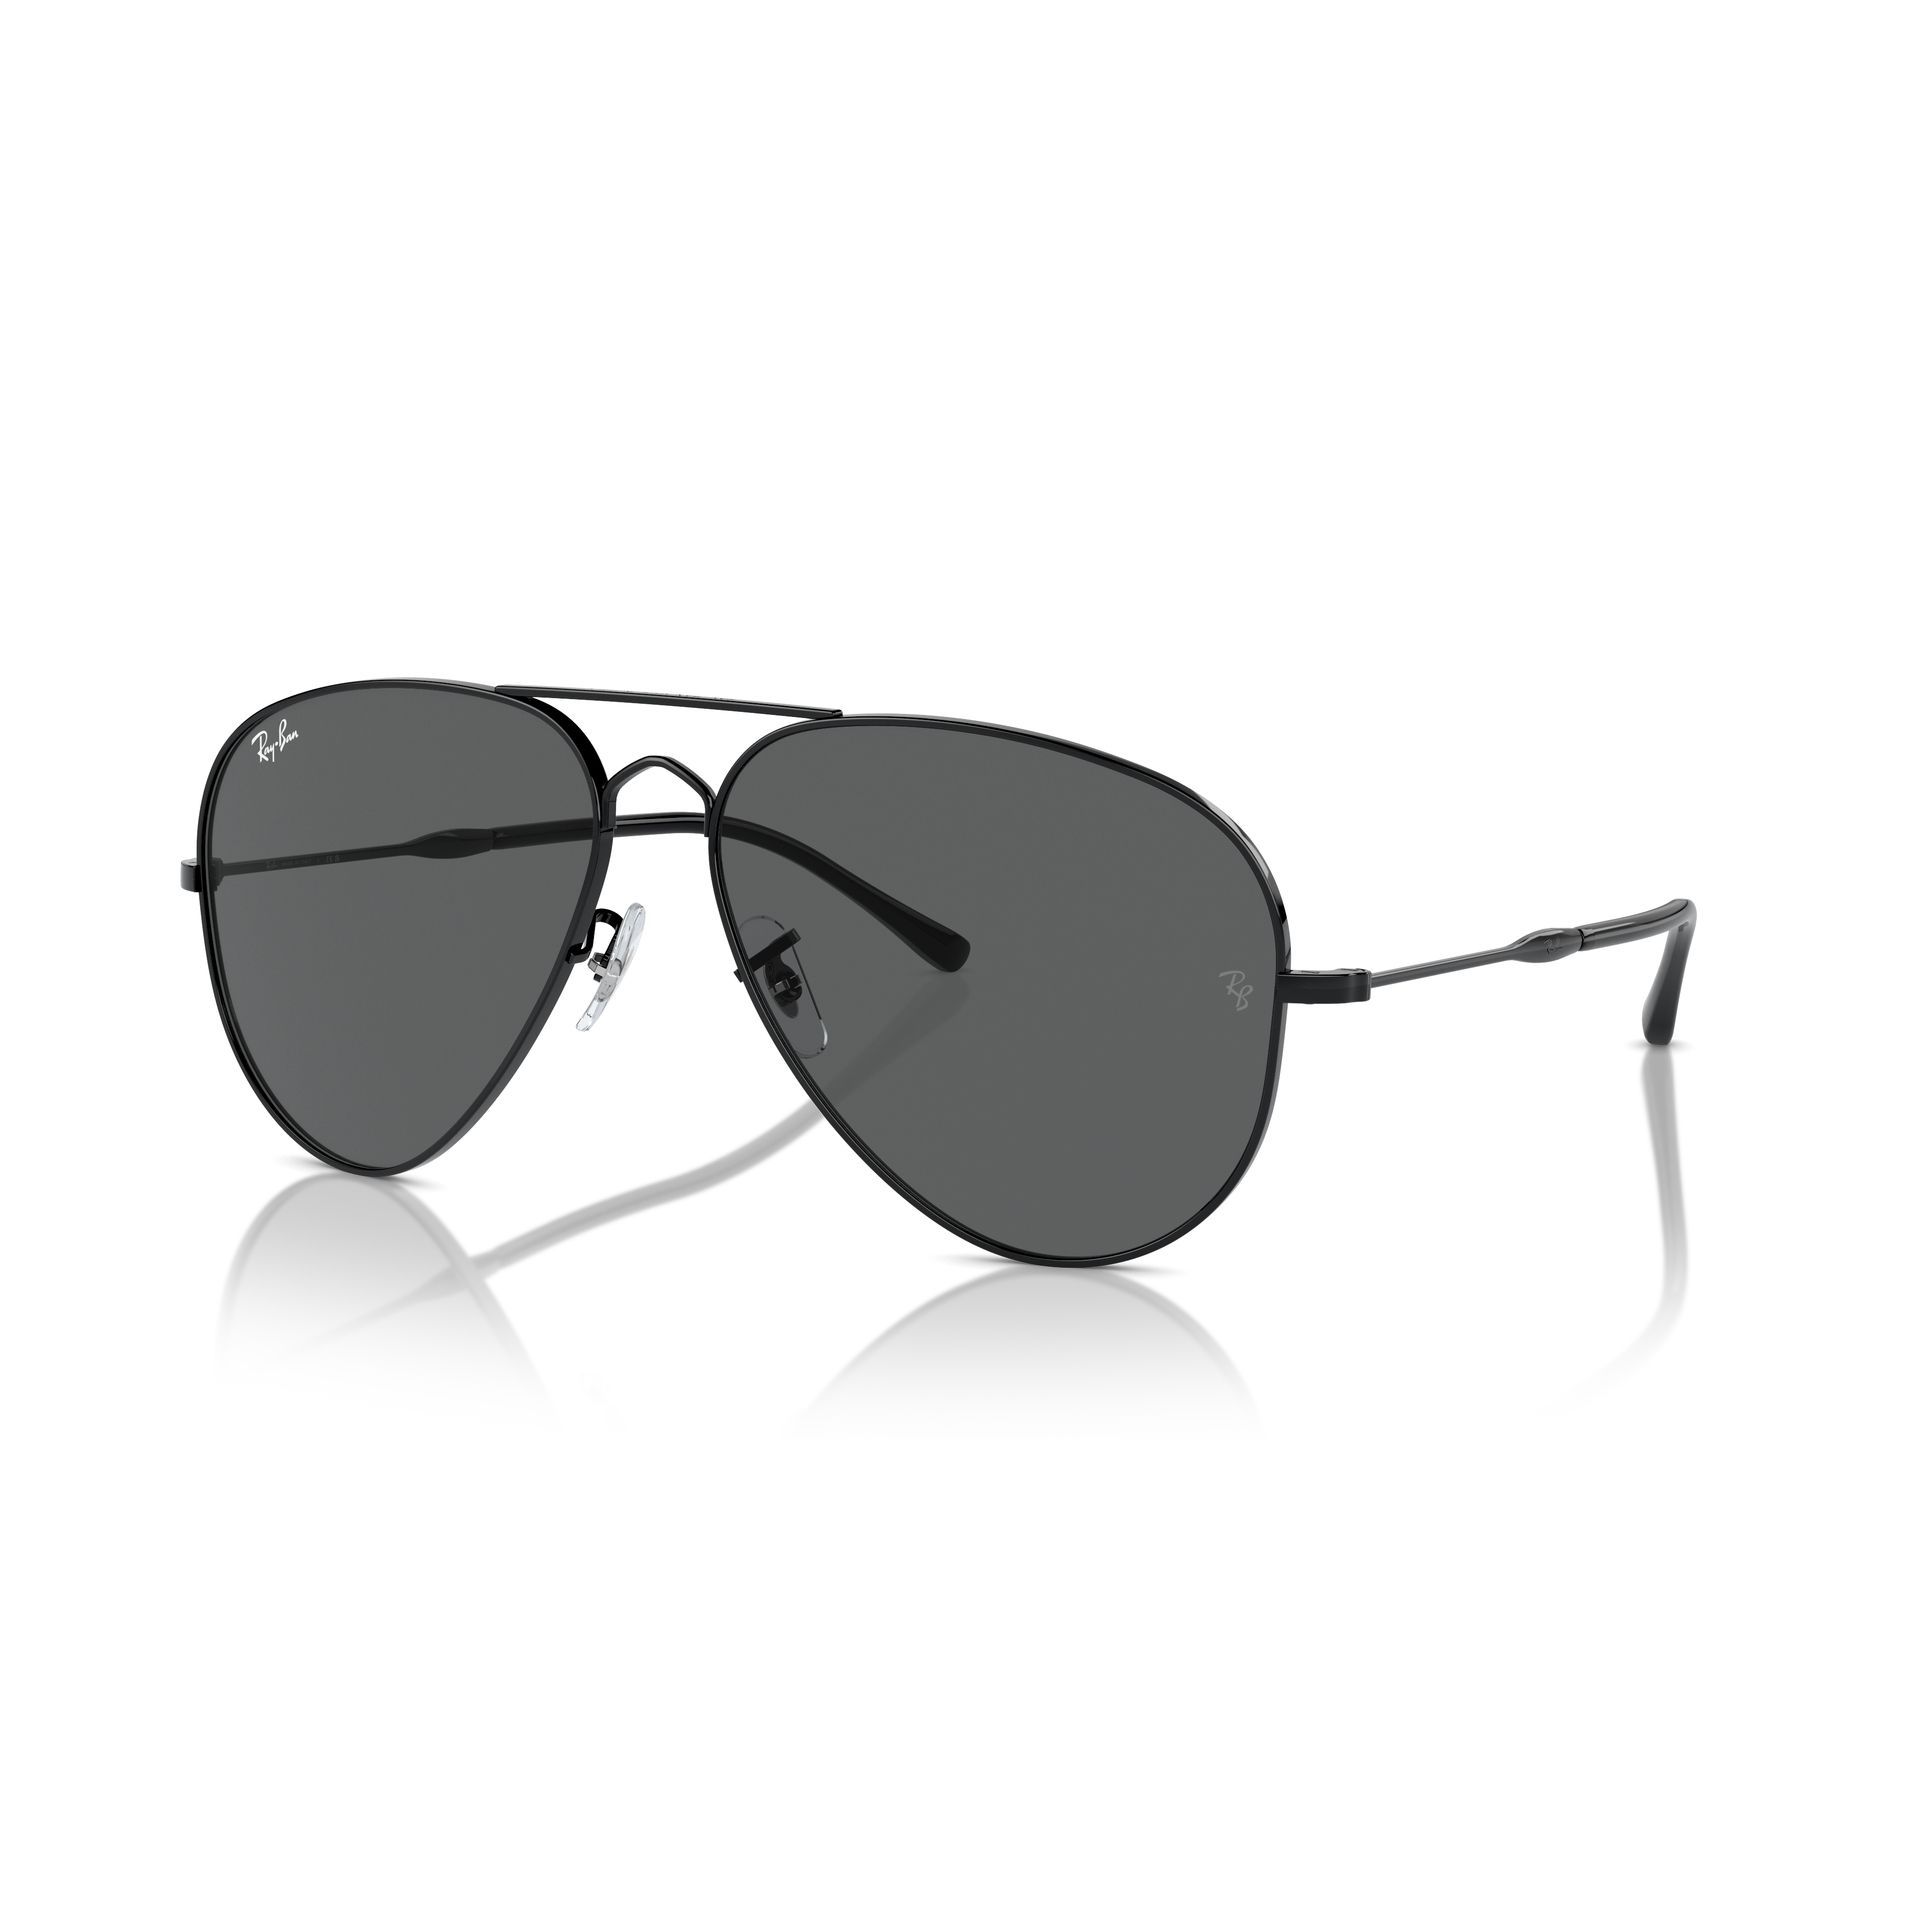 0RB3825 Pilot Sunglasses 002 B1 - size 58